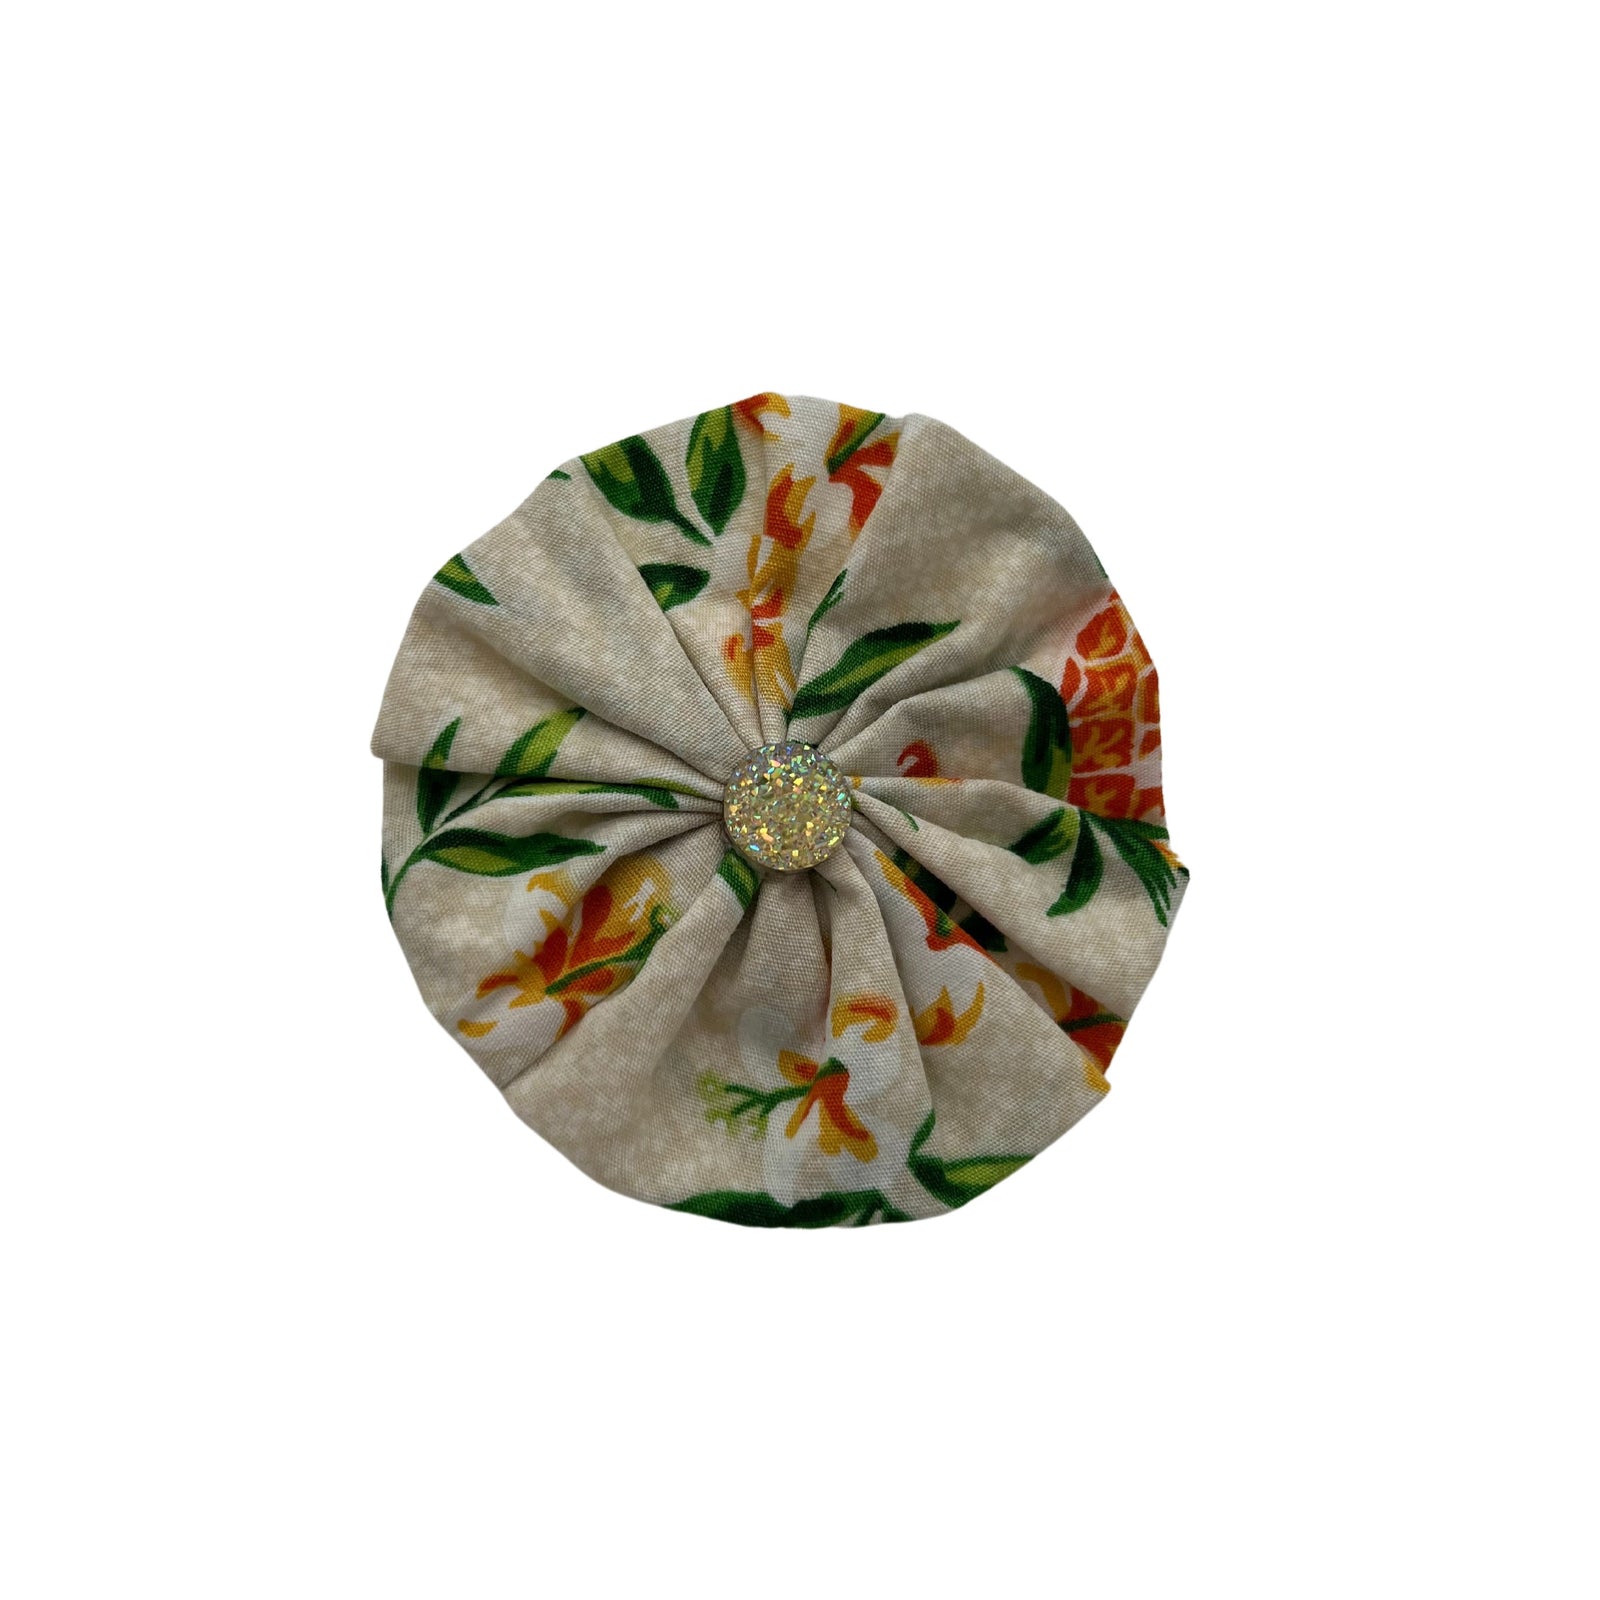 Pop-Up Mākeke - humBowbarks Pet Wear - Ruffle Flower - White Glitter - Front View